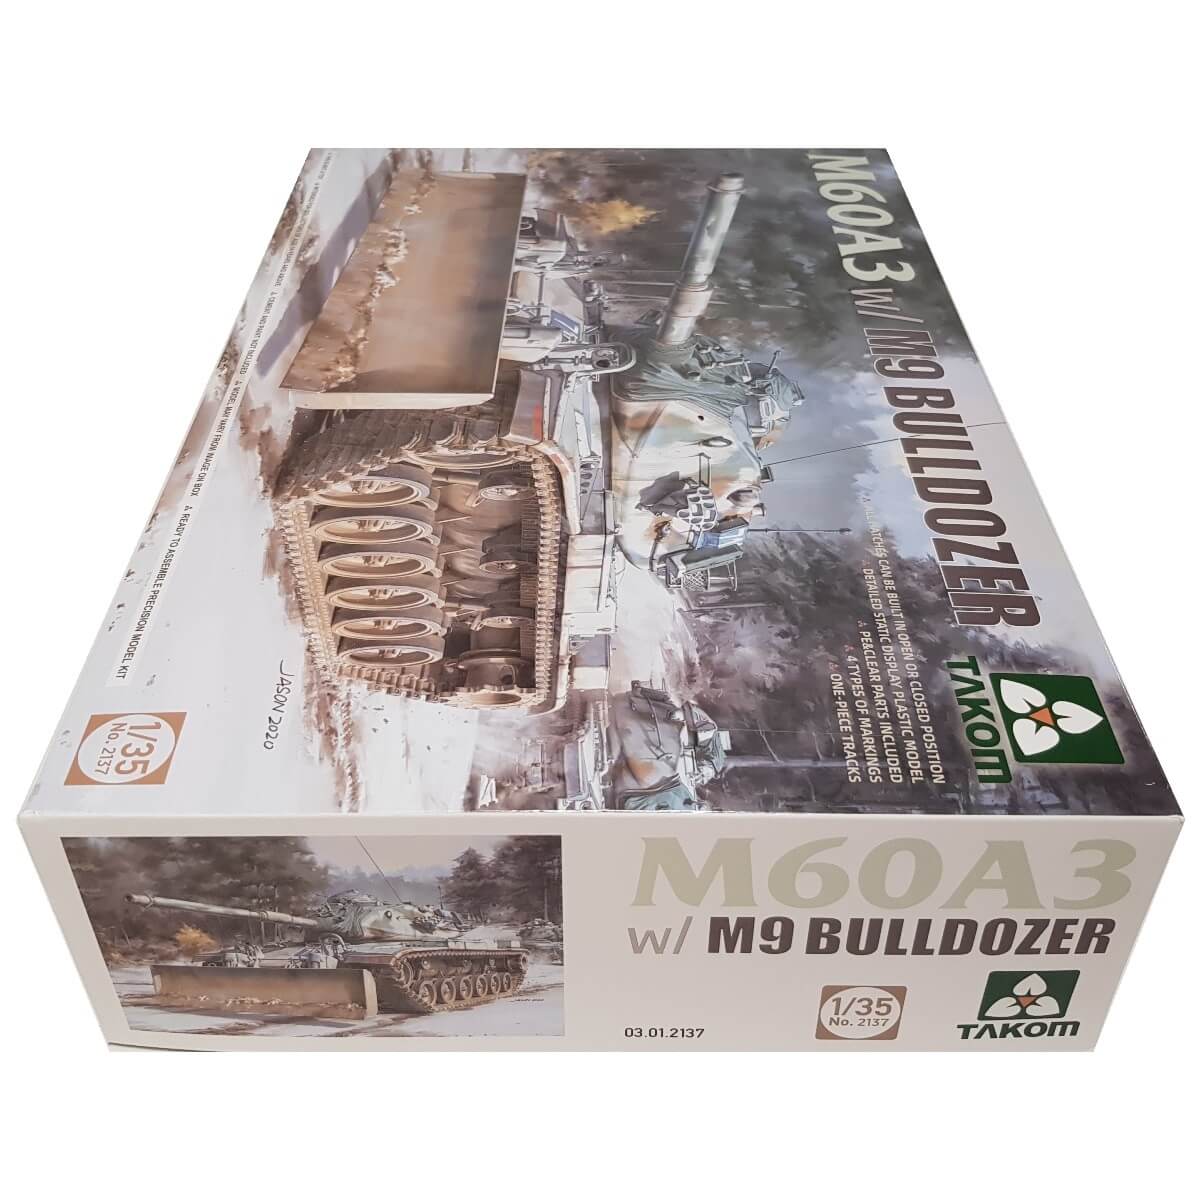 1:35 M60A3 with M9 Bulldozer - TAKOM